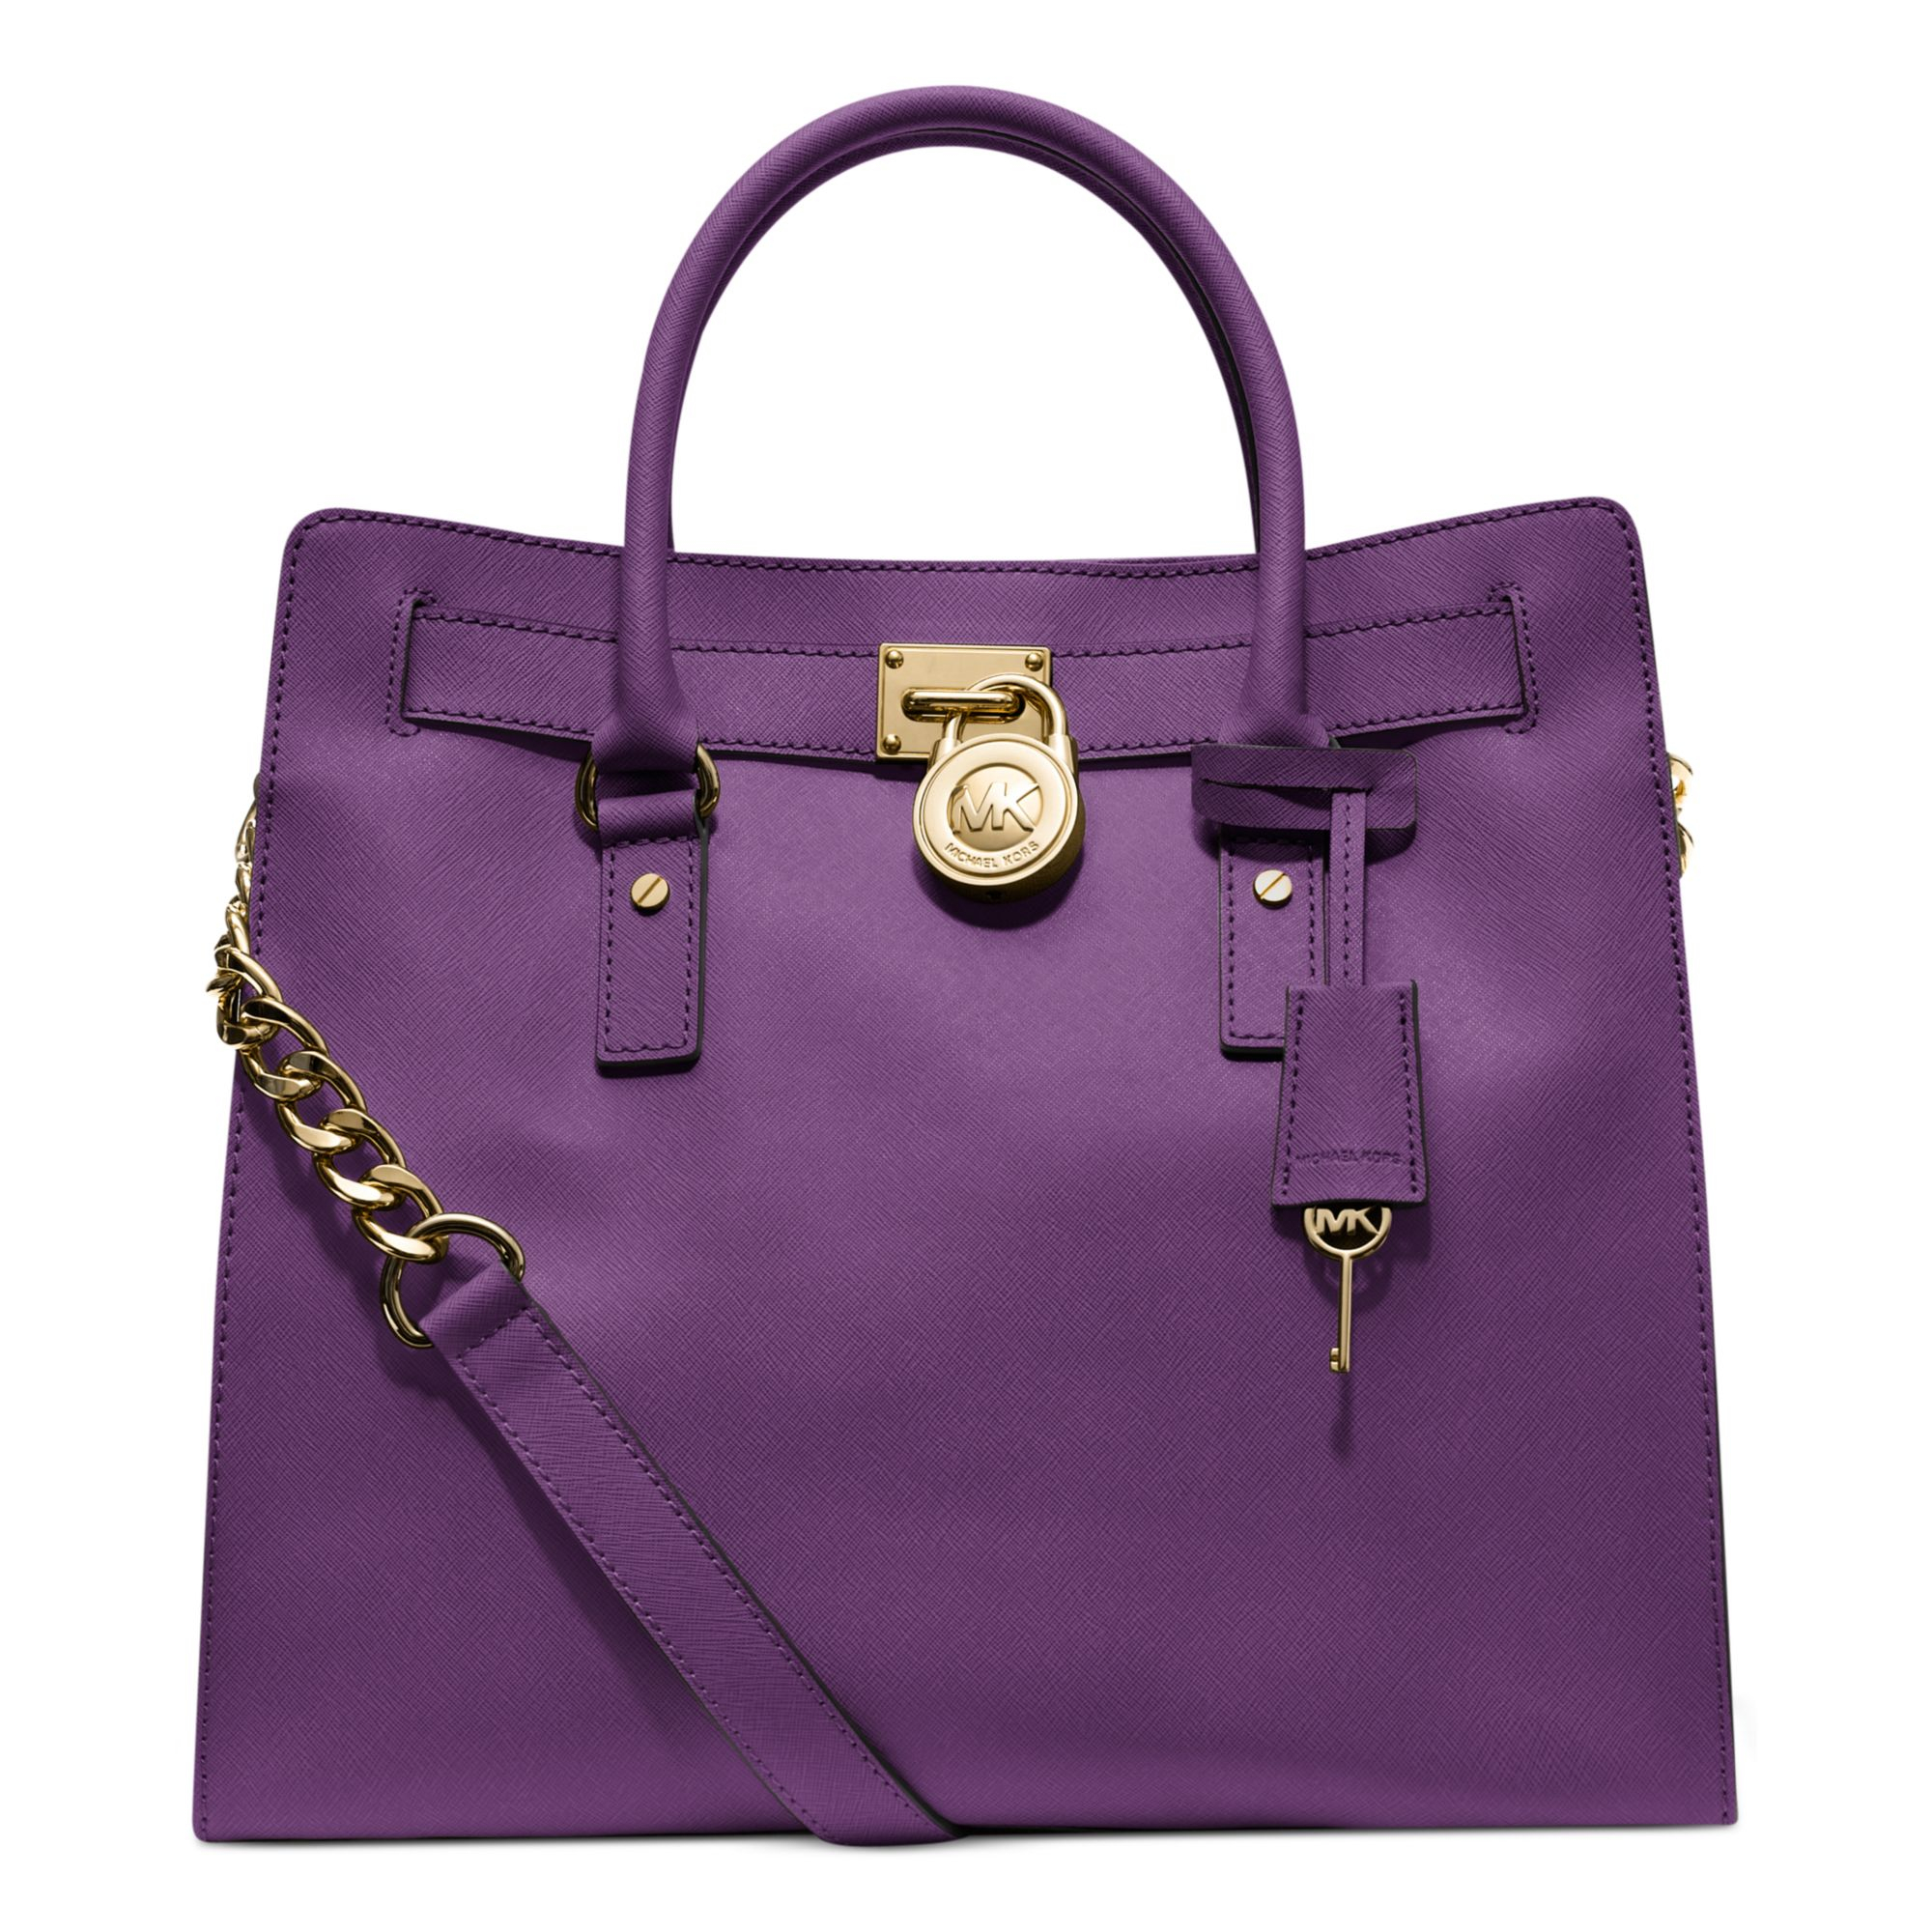 Best luggage brands world puma, michael kors purple bags